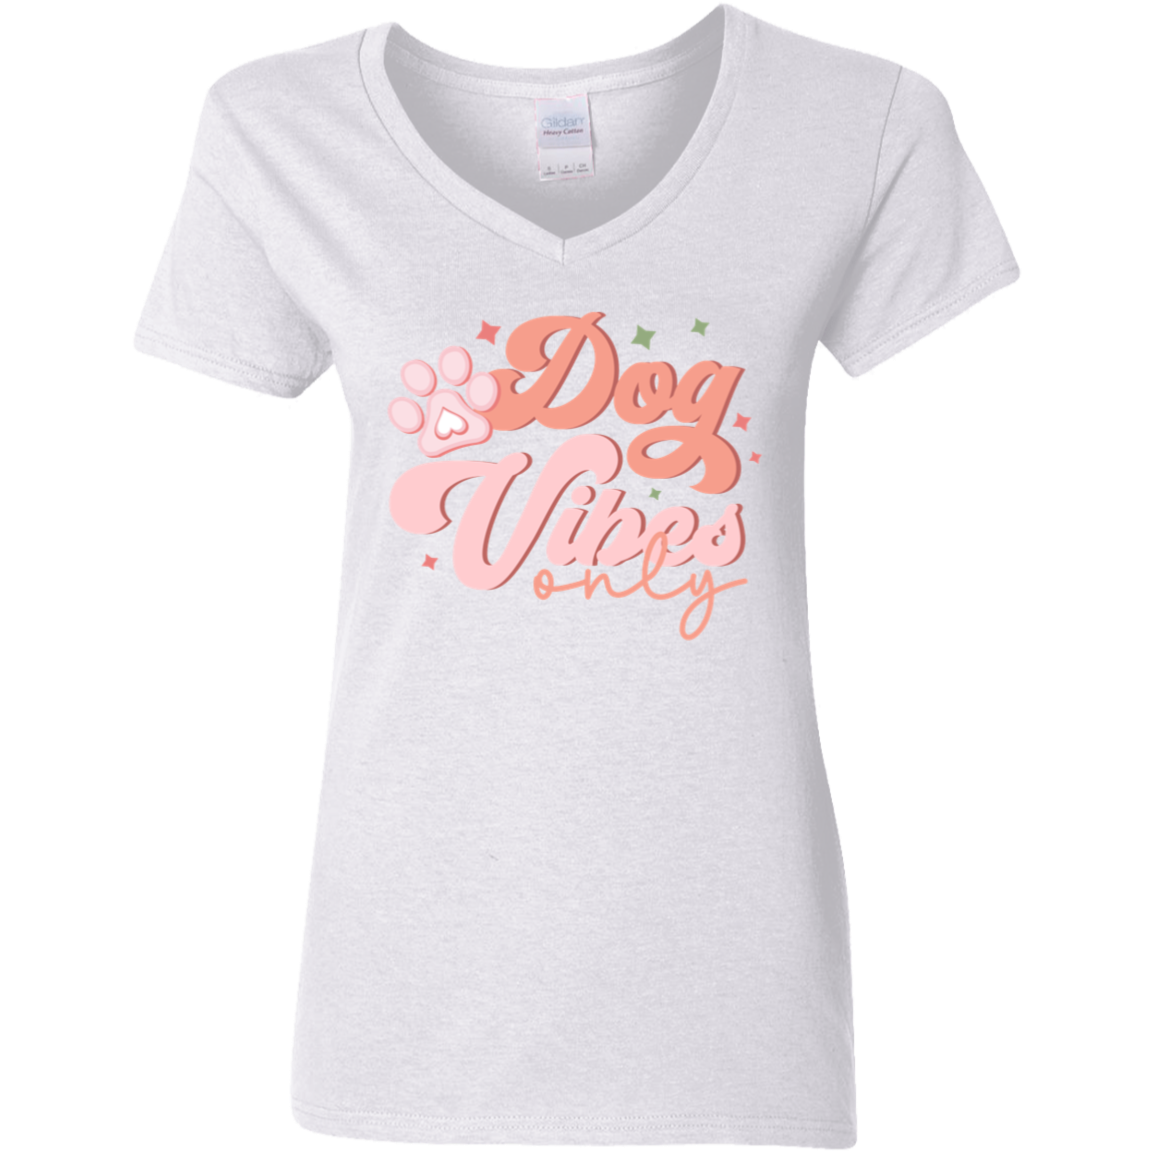 Dog Vibes Only  Ladies' V-Neck T-Shirt